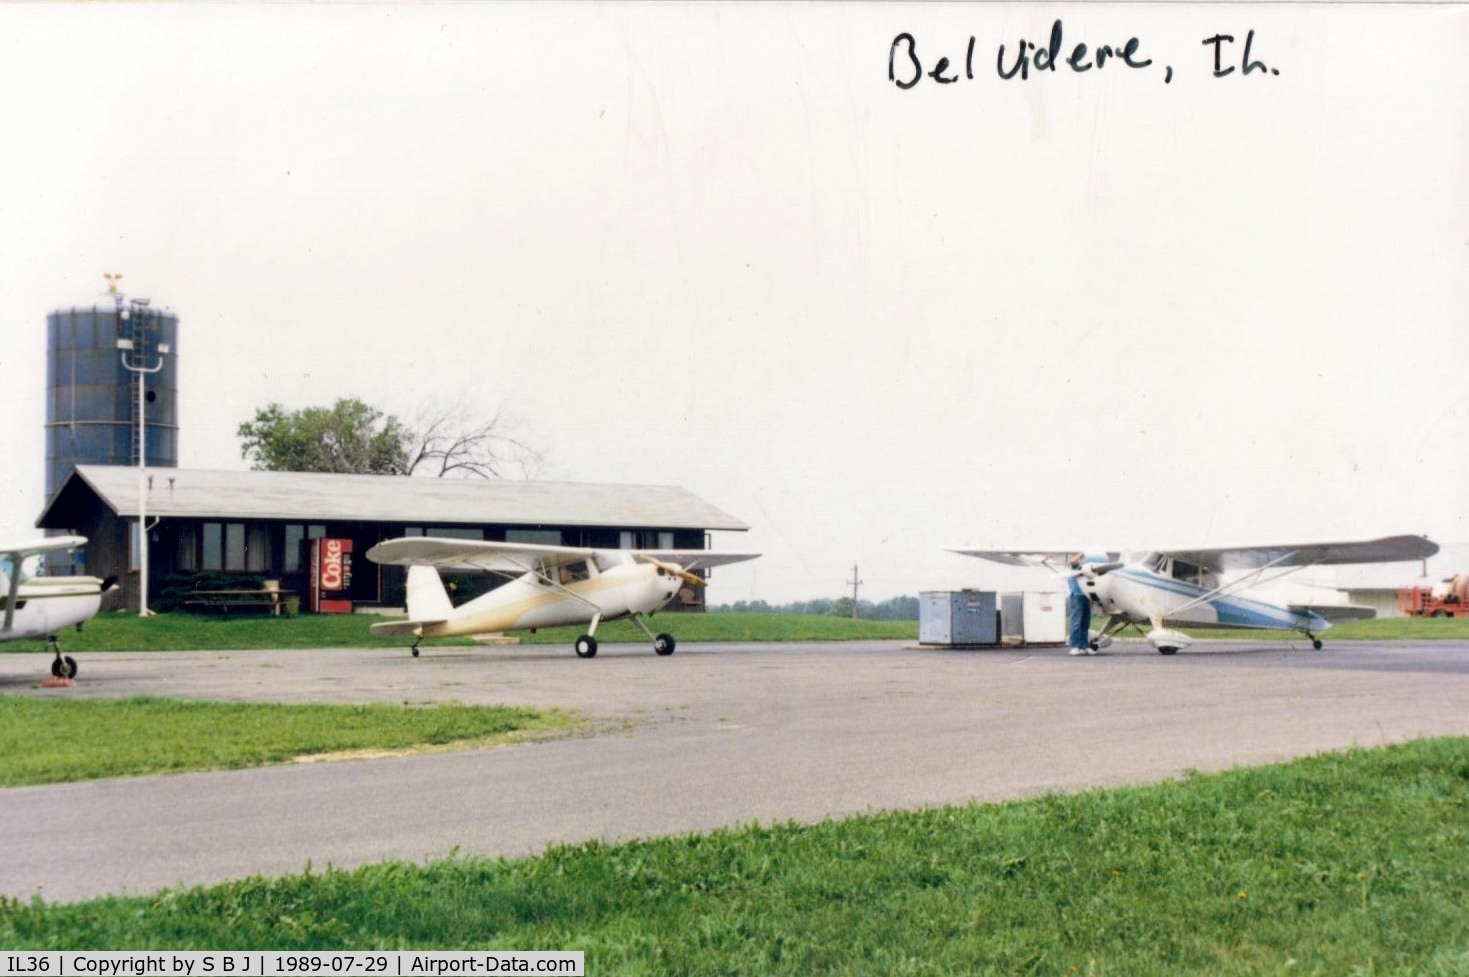 Bob Walberg Field Airport (IL36) - A fuel stop at IL36.